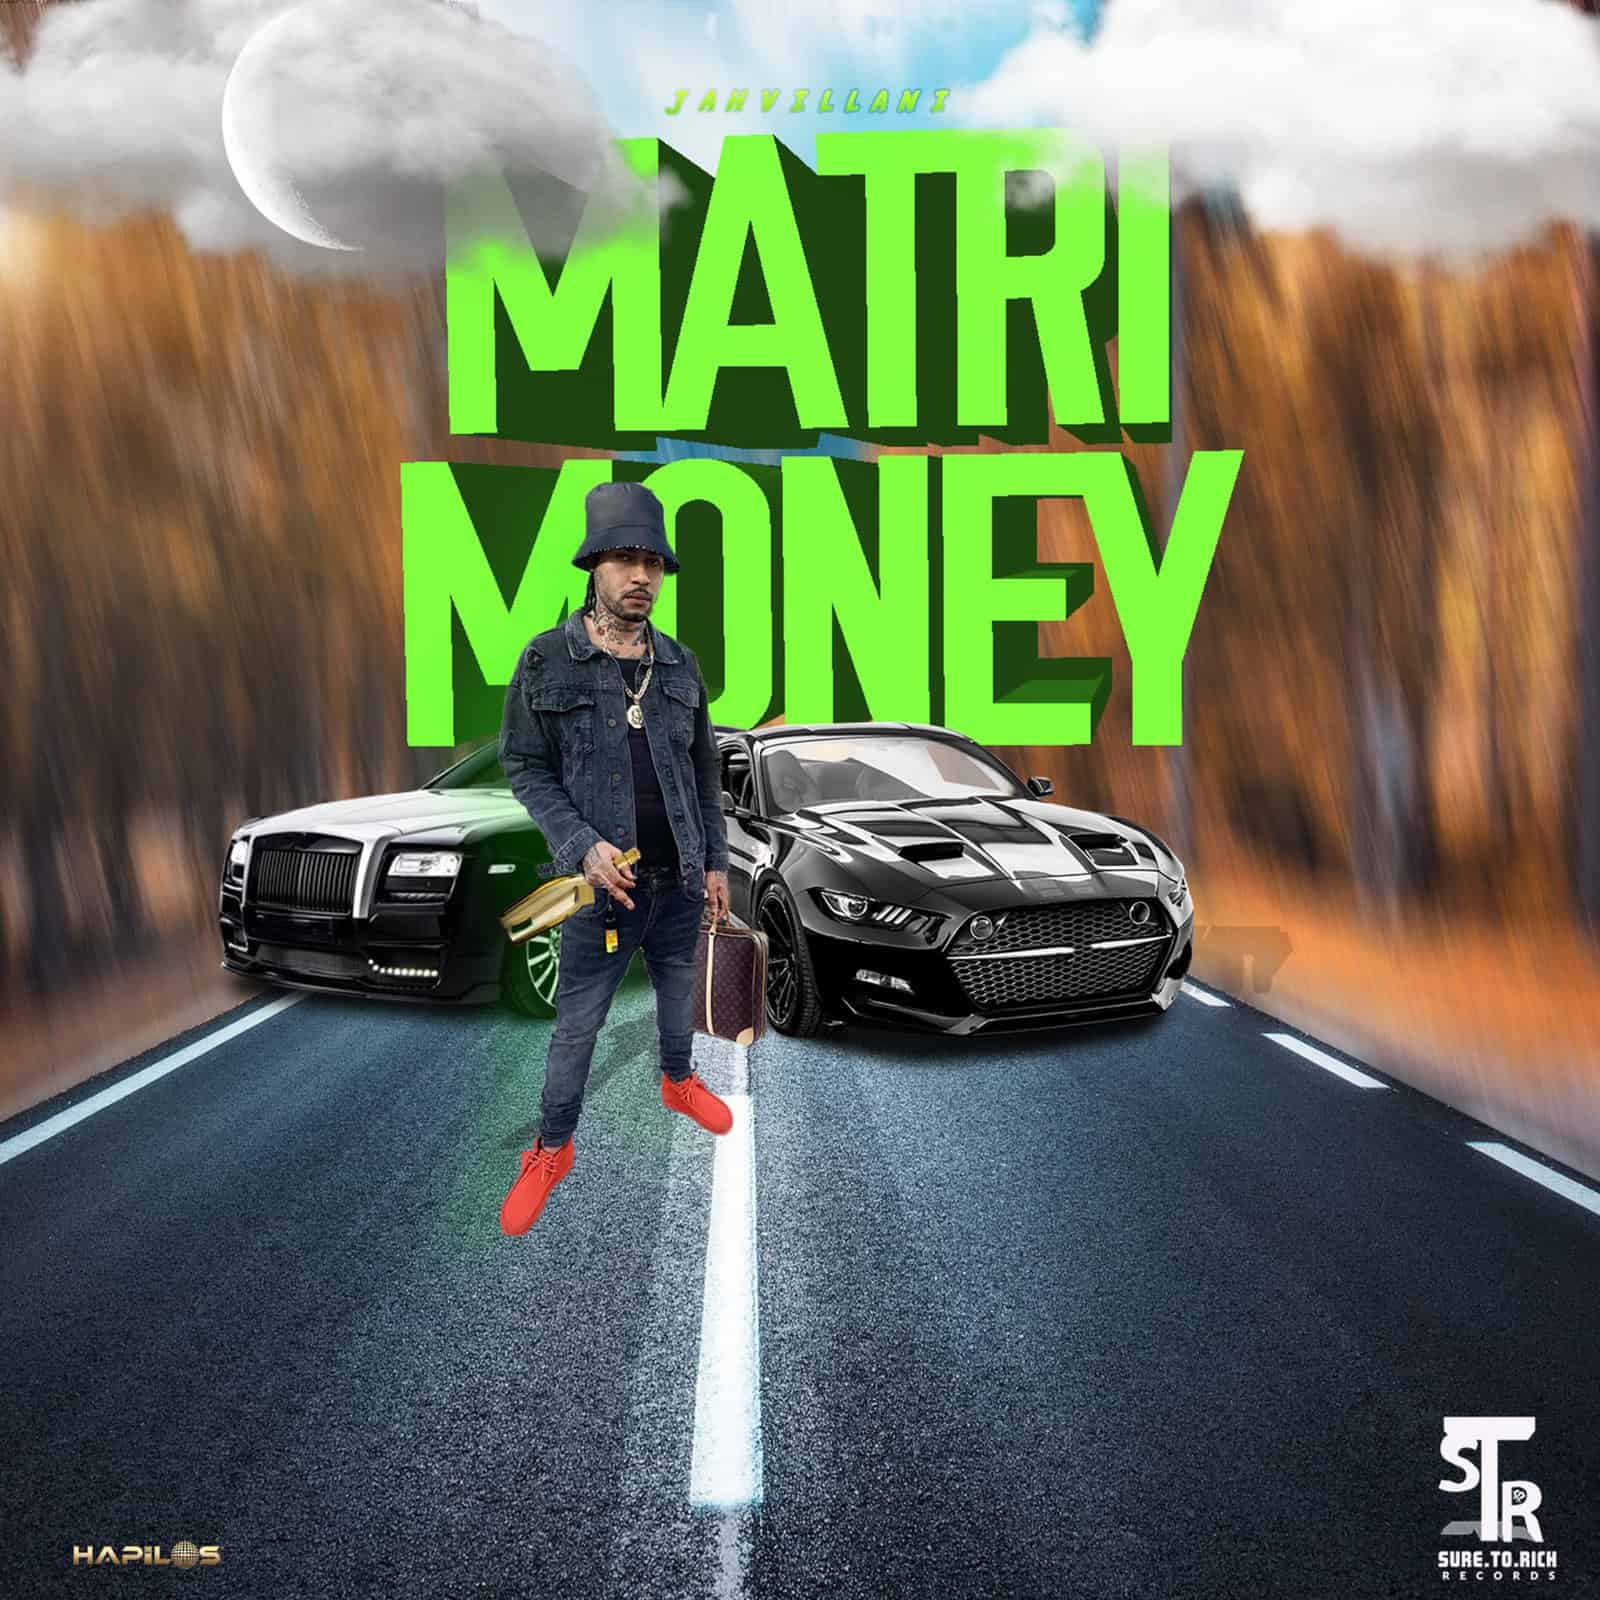 Jahvillani - Matri Money